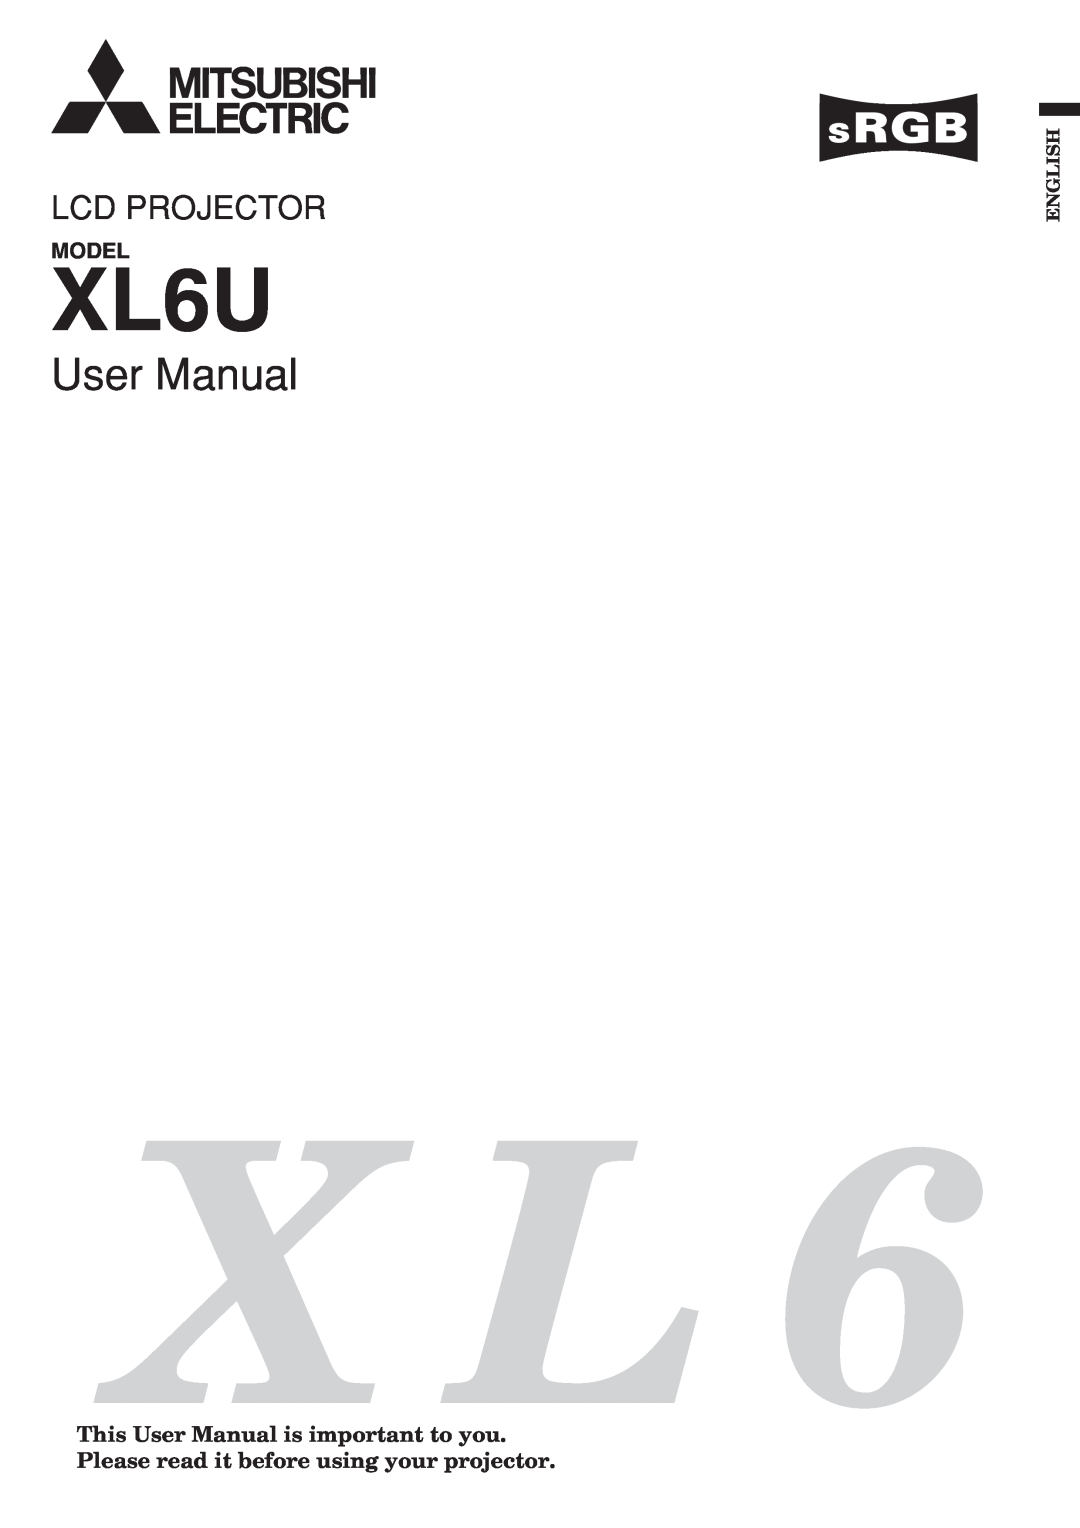 Mitsubishi Electronics XL6U user manual User Manual, Lcd Projector, Model 